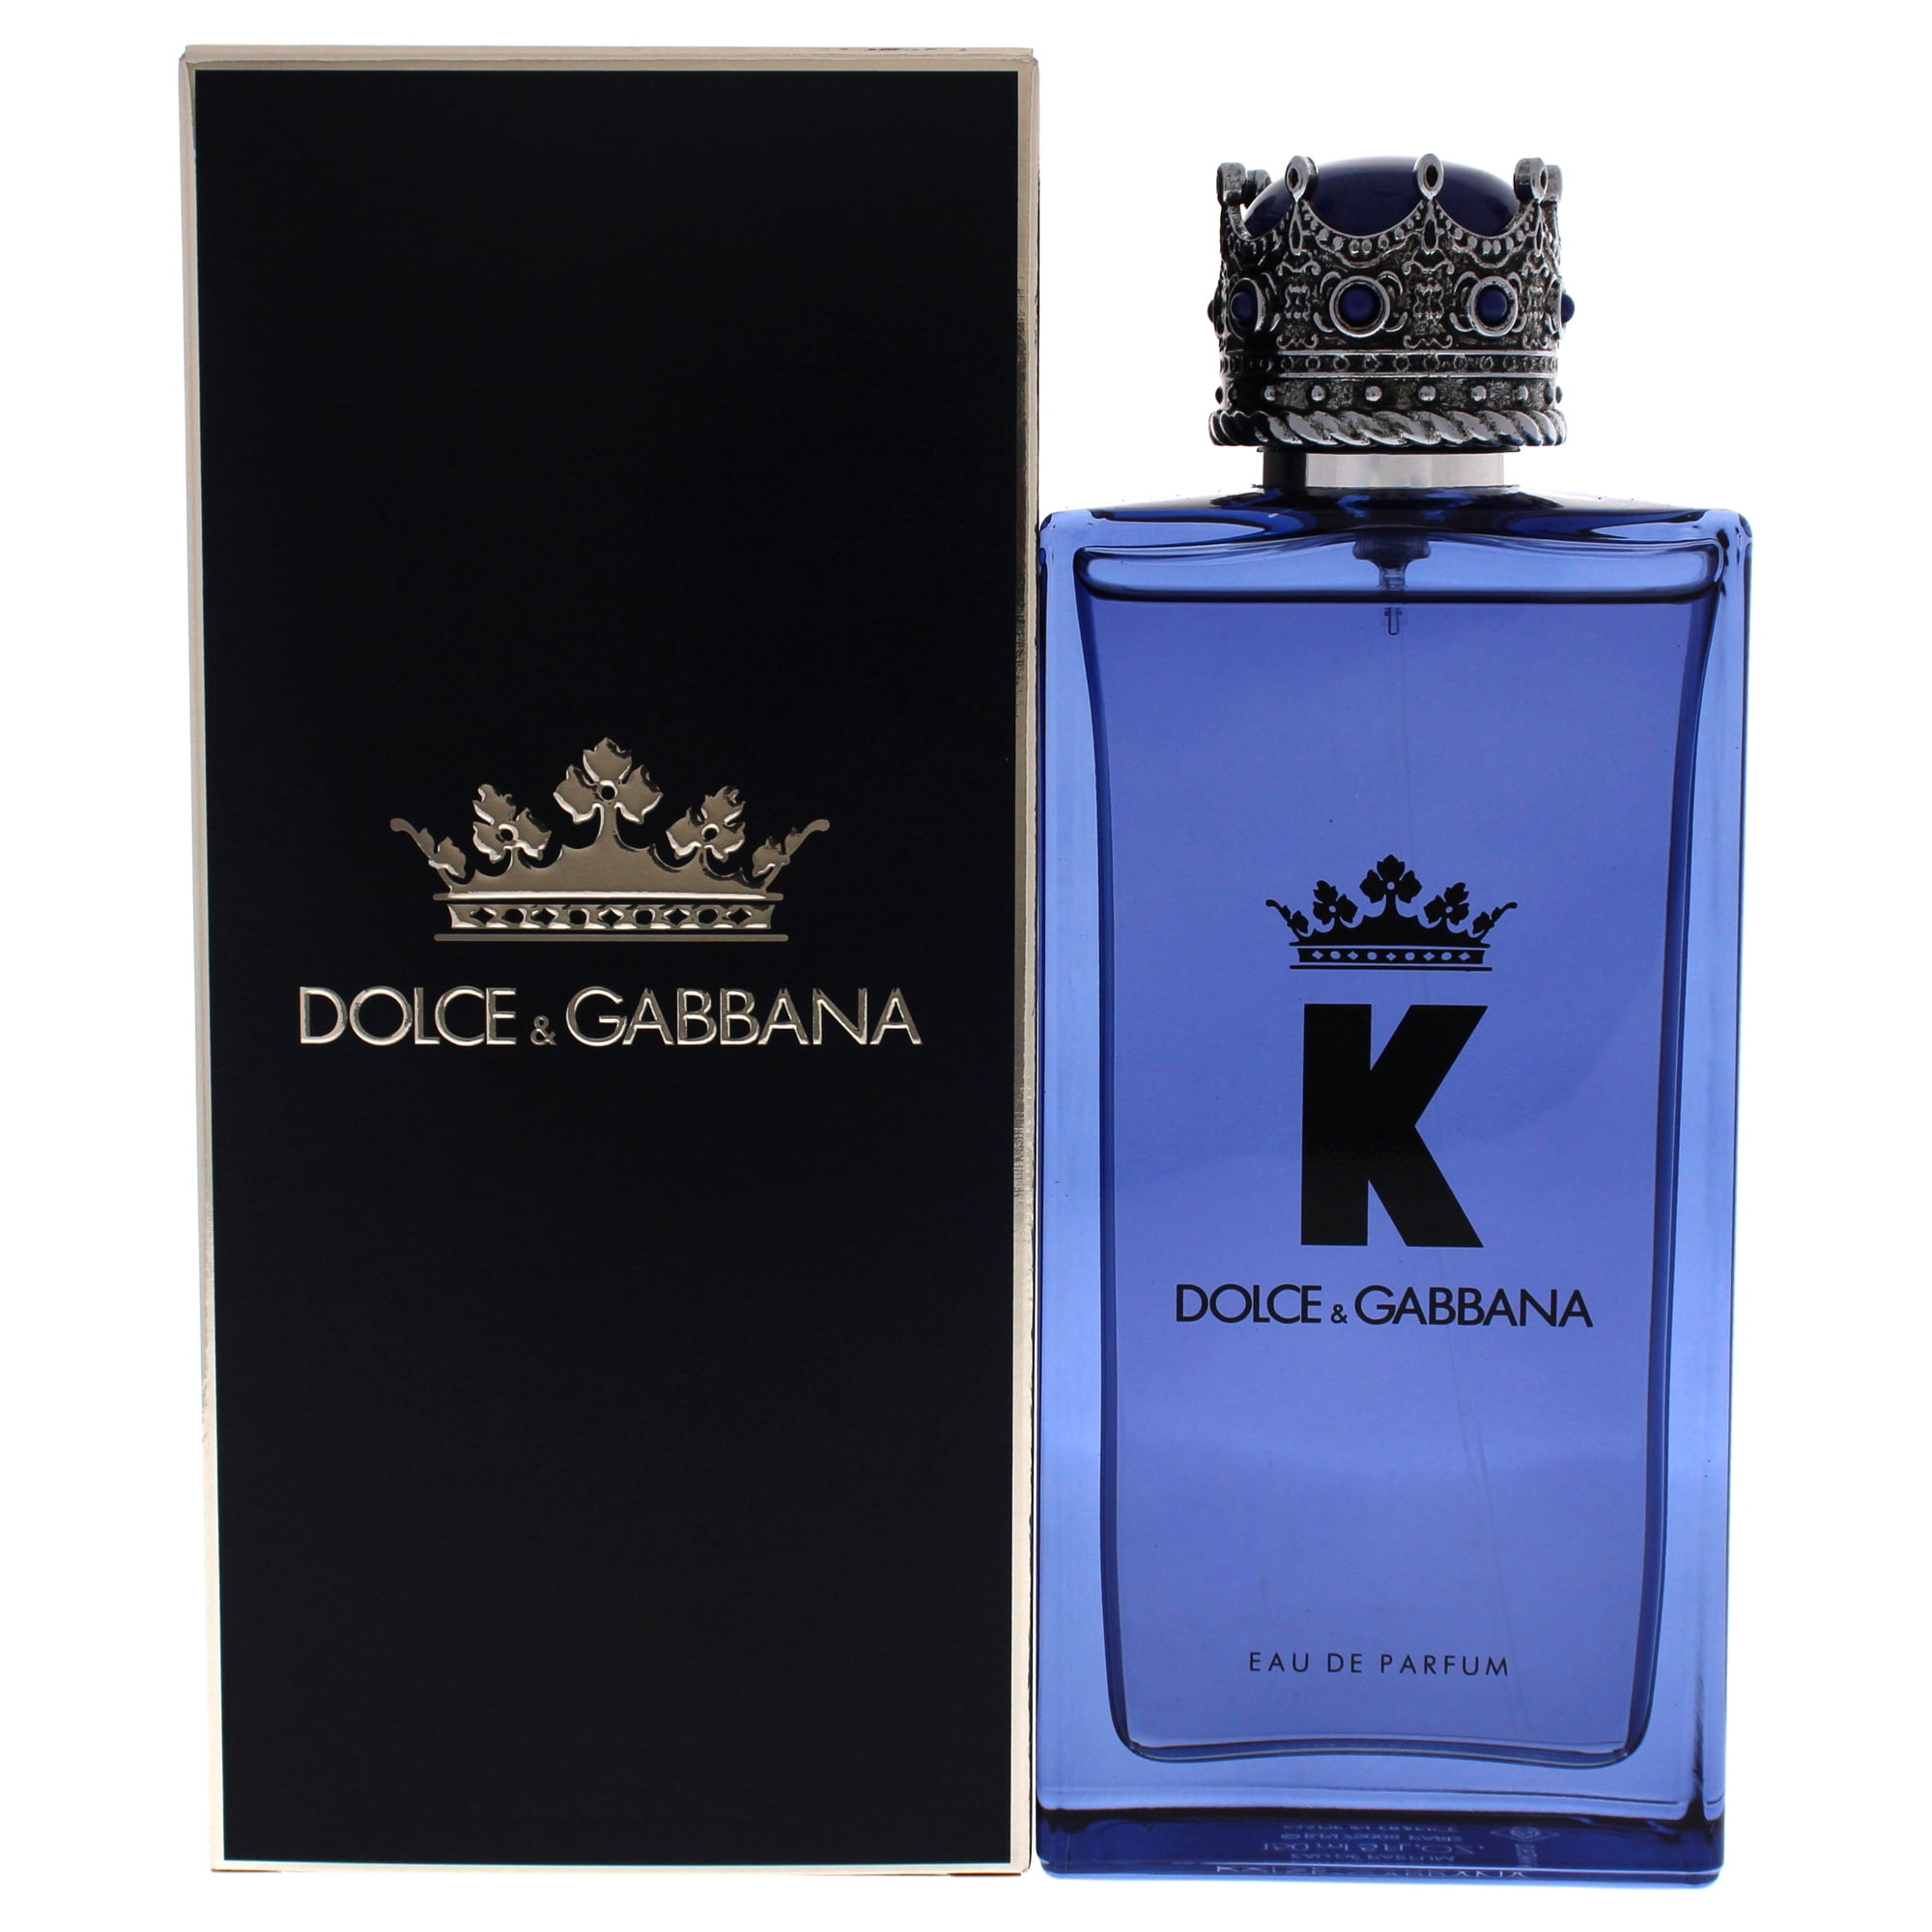 Dolce & Gabbana K for Men 5.0 oz Eau de Parfum Spray